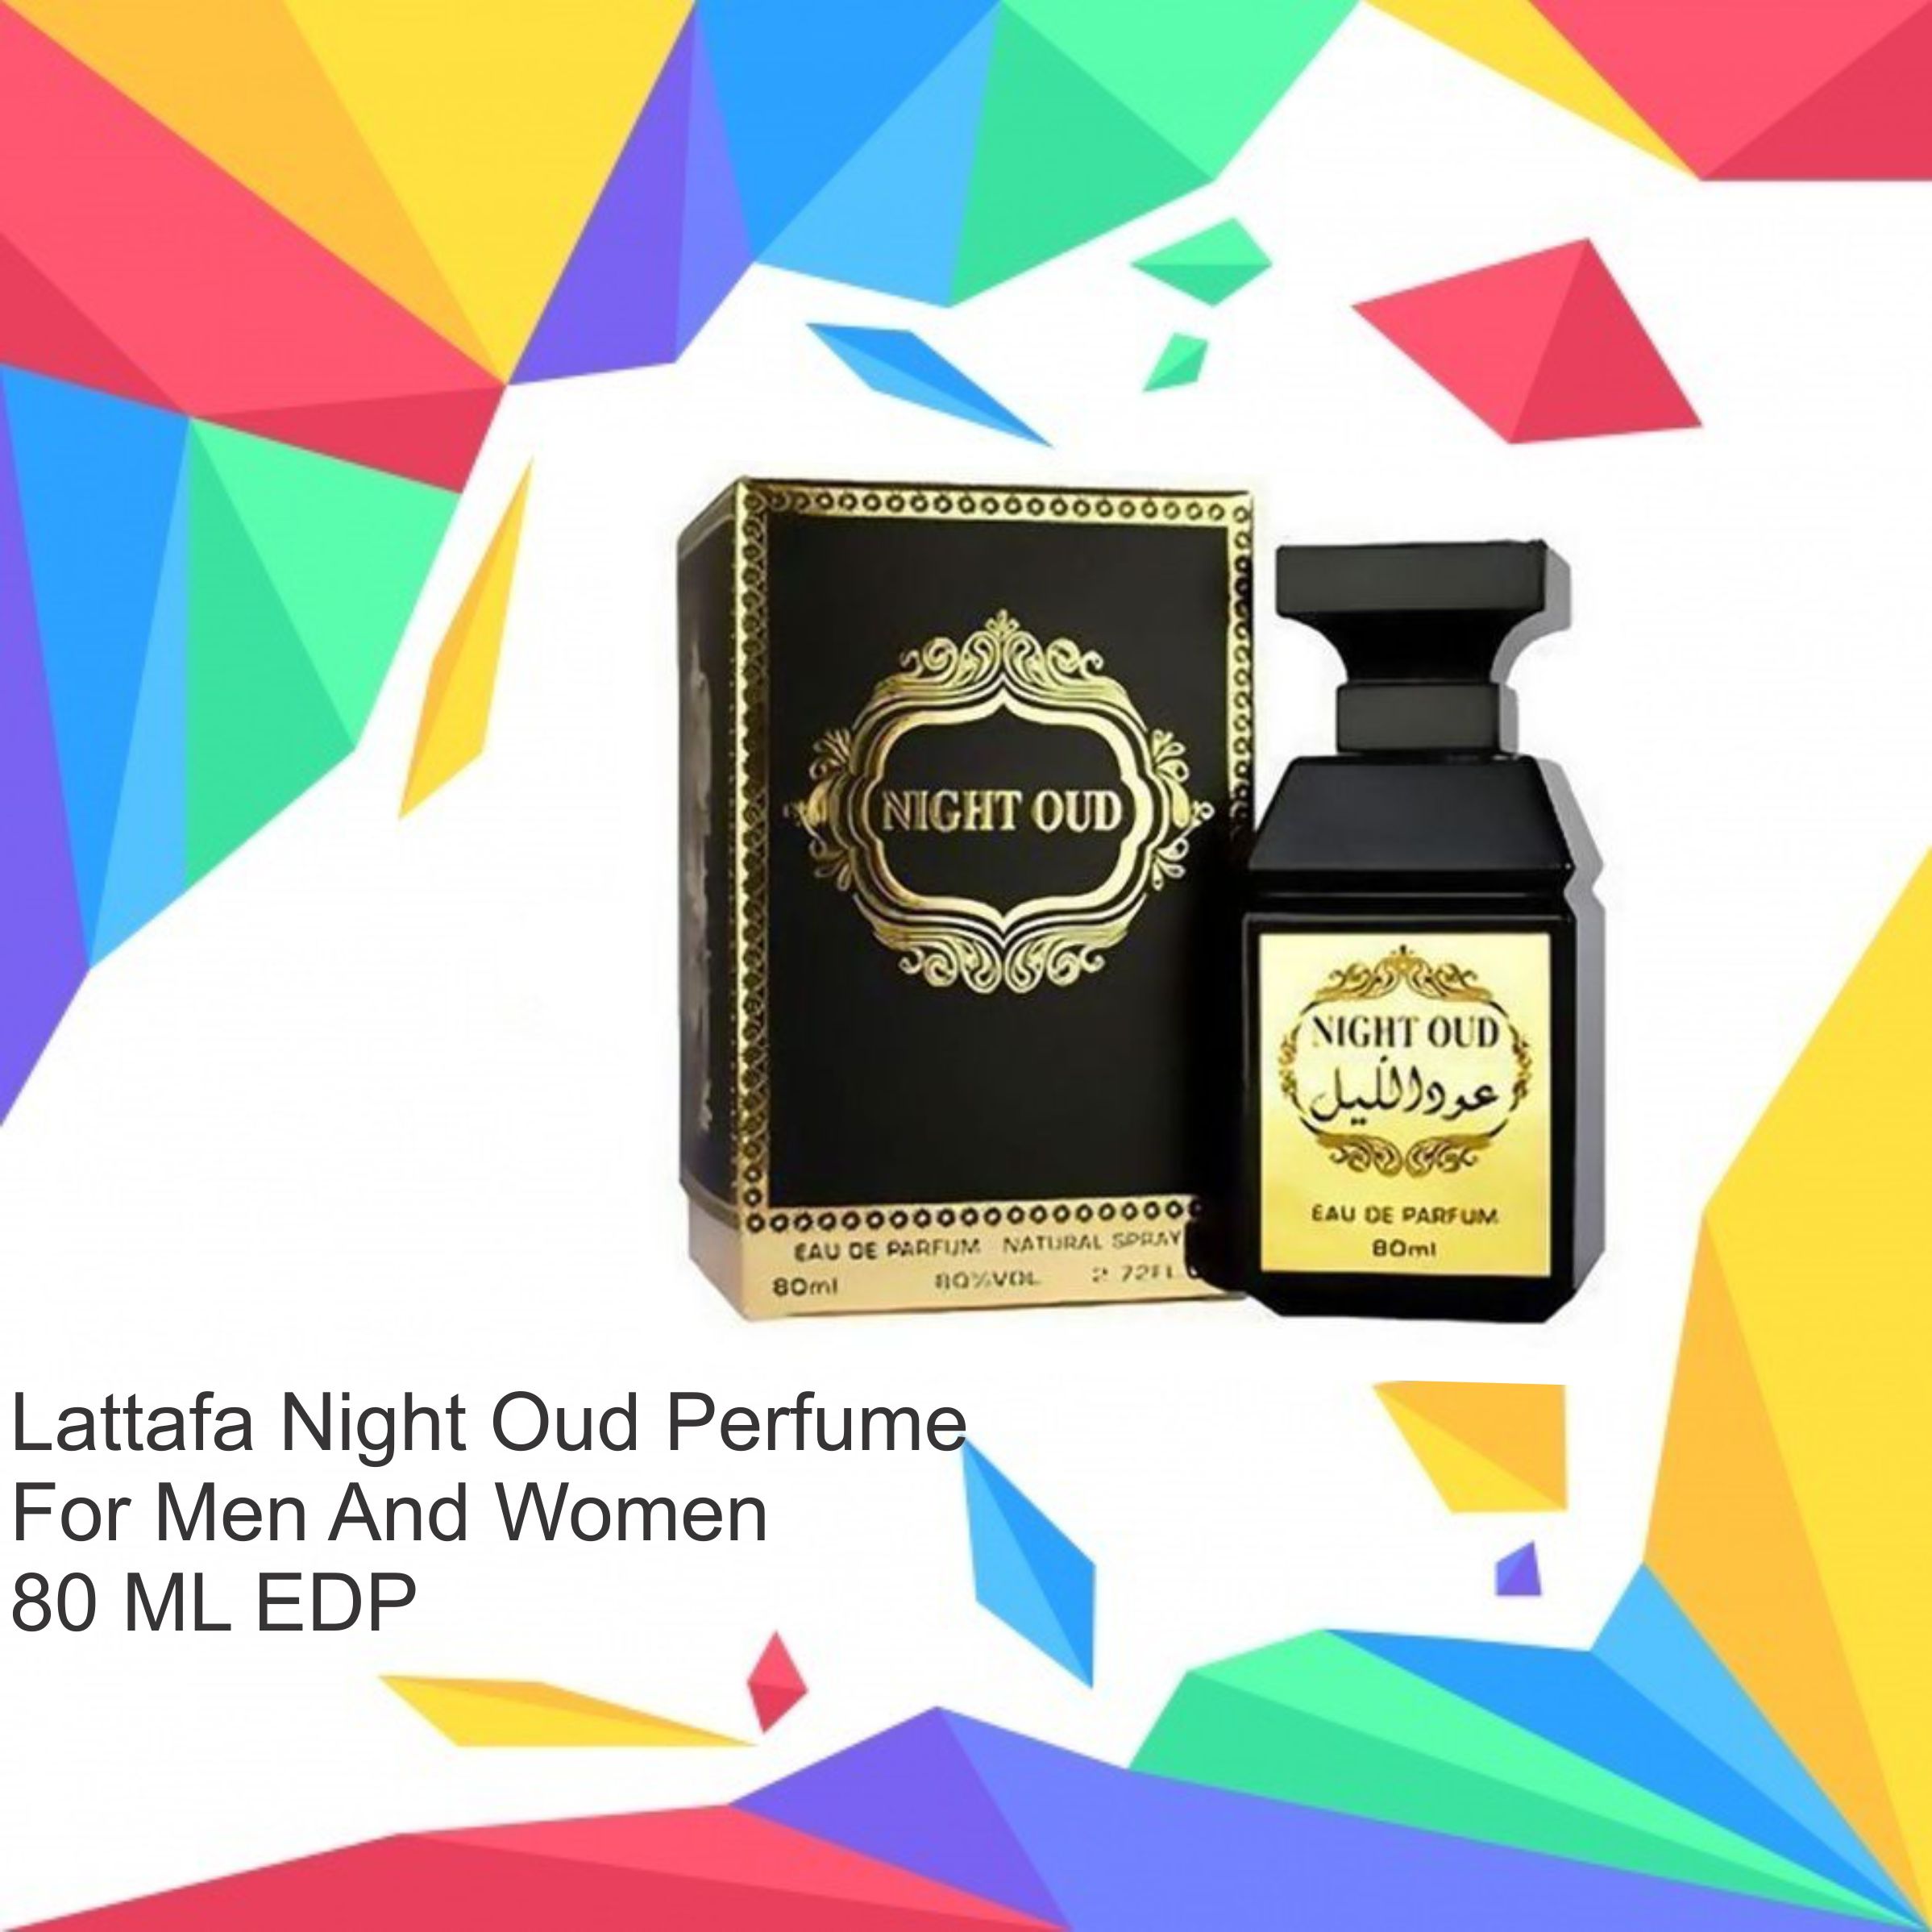 lattafa-night-oud-perfume-for-men-and-women-80-ml-edp